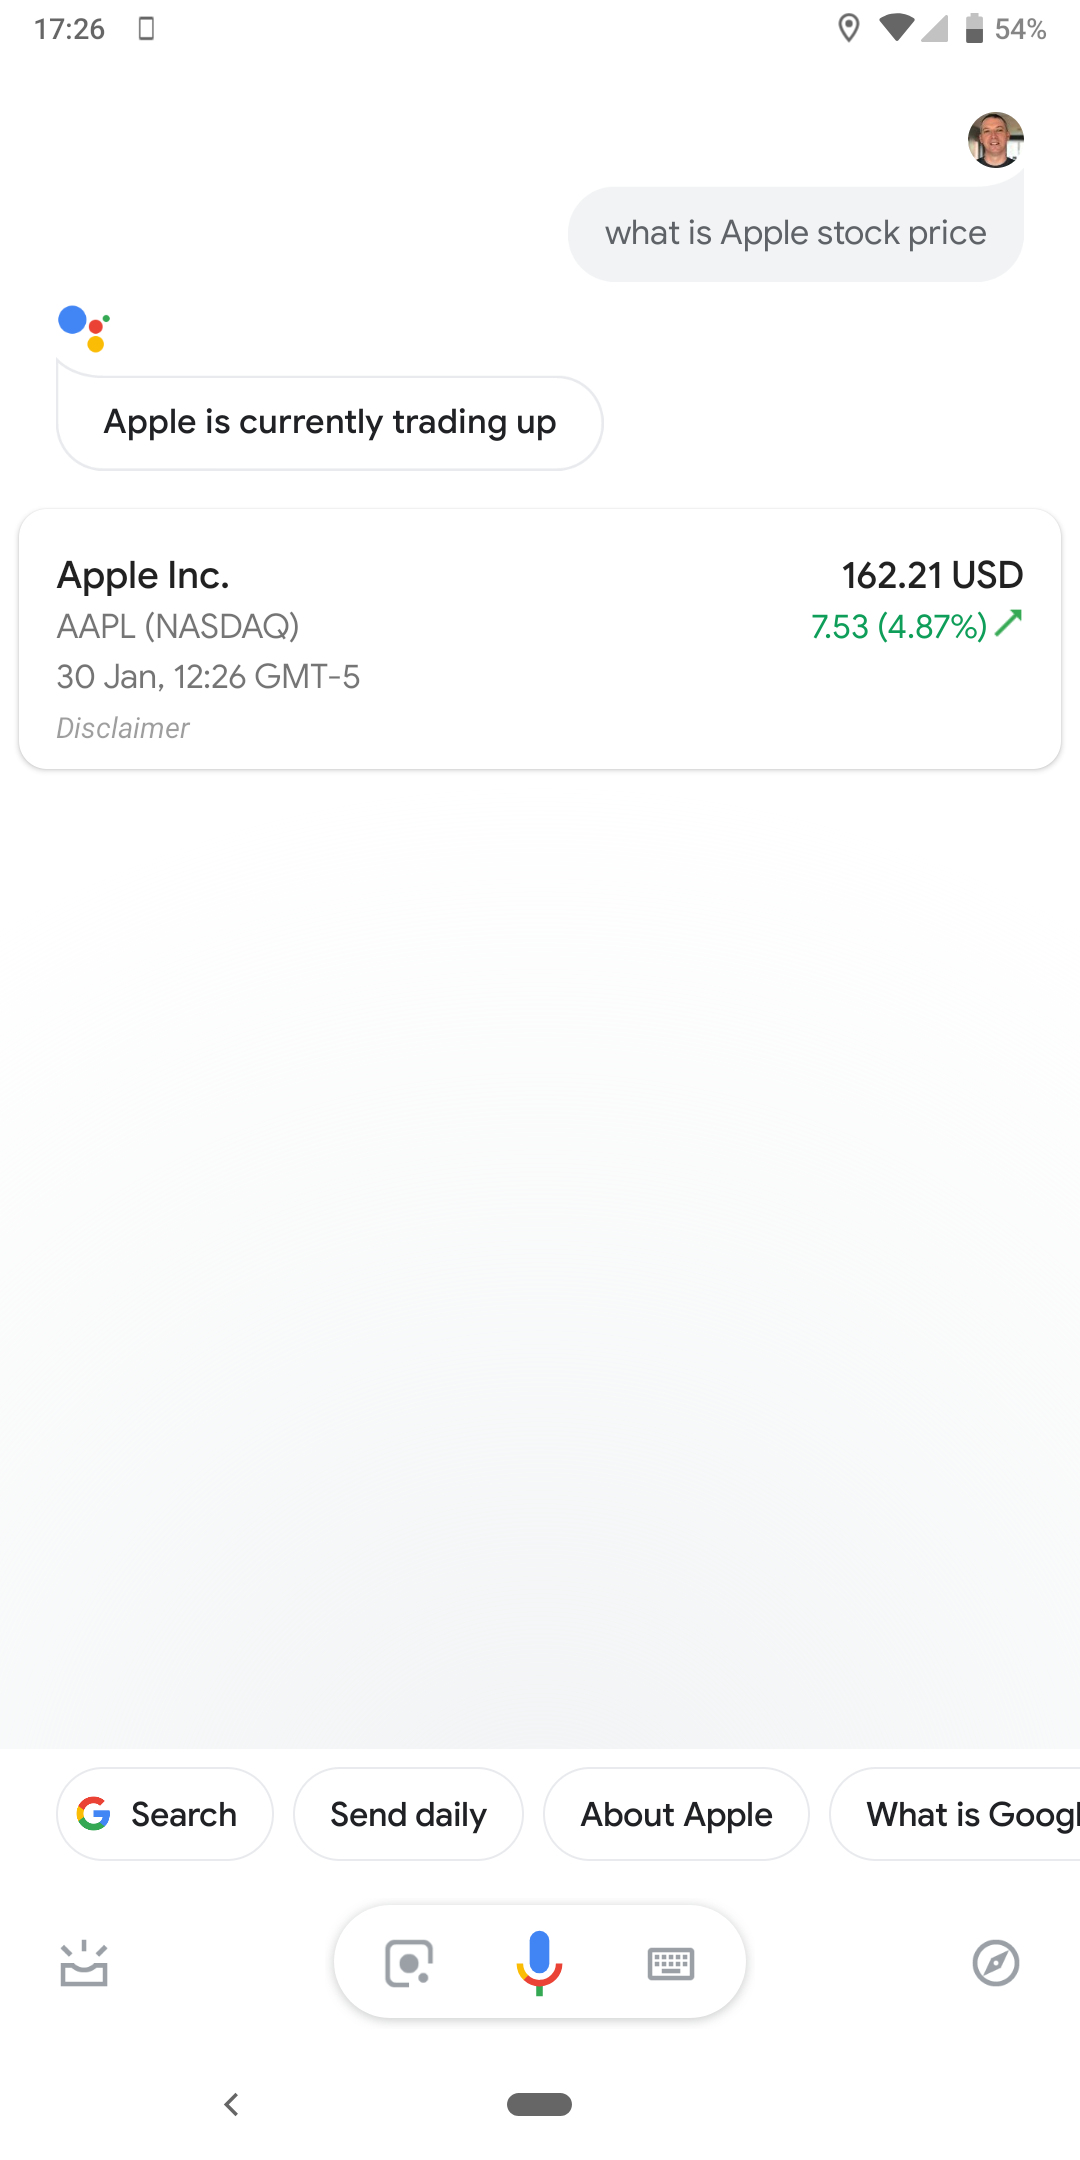 ok, google what is apple stock price?